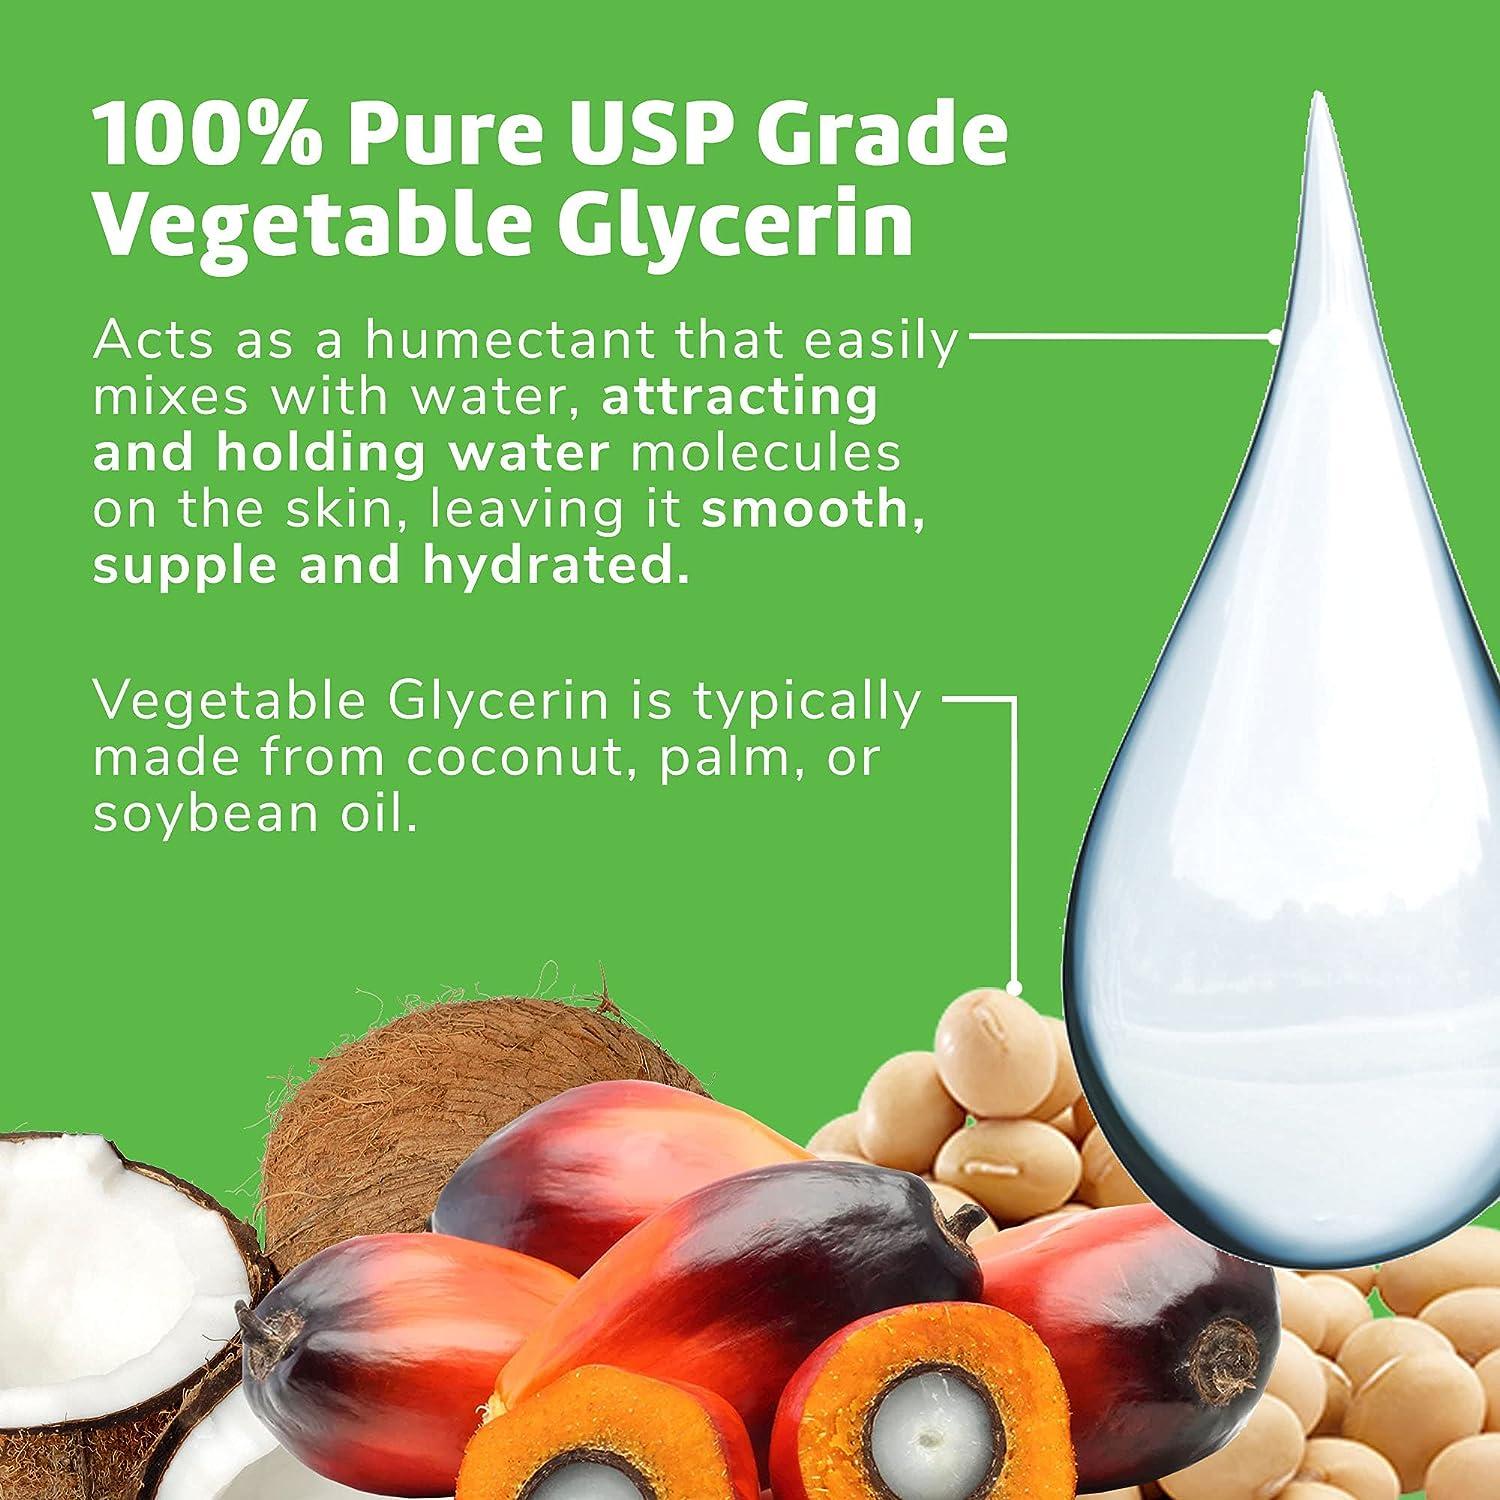 de La Cruz Vegetable Glycerin 100% Pure Liquid Glycerine USP Grade for Hair Skin and DIY Projects 8 fl. oz. 8 fl oz (Pack of 1)